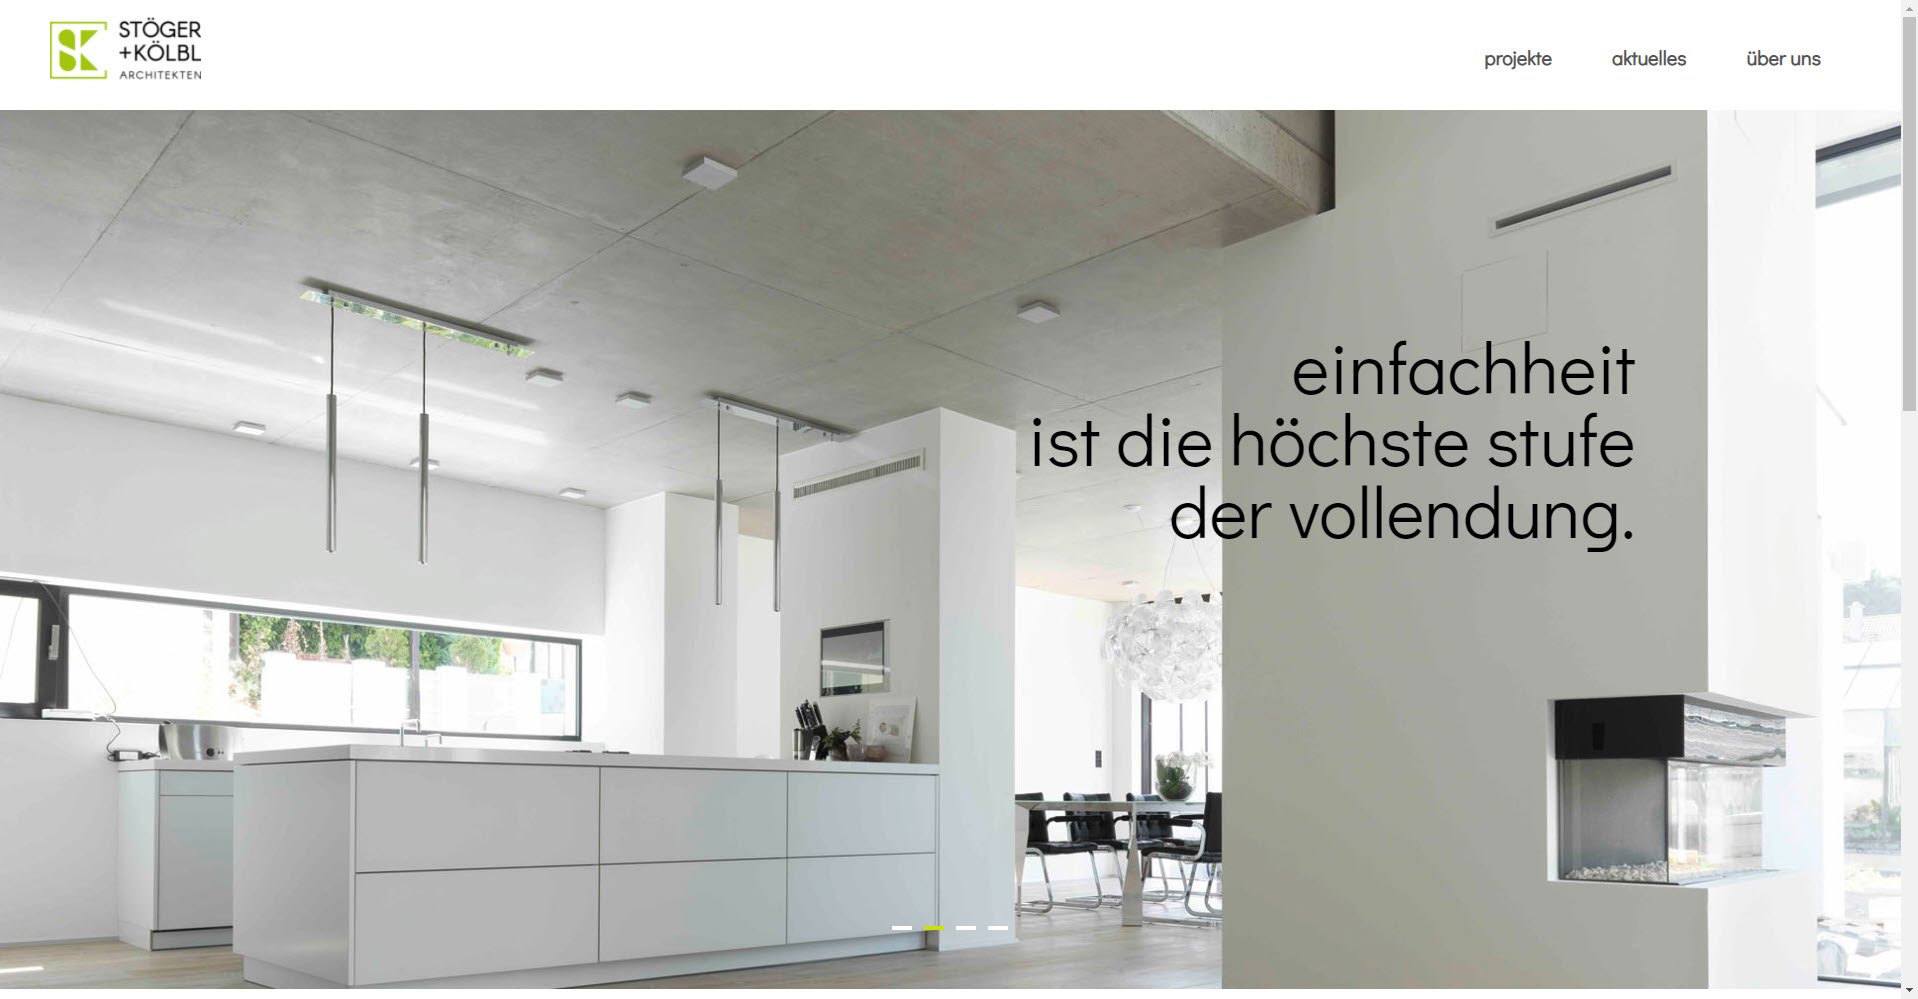 stöger + kölbl architekten GmbH